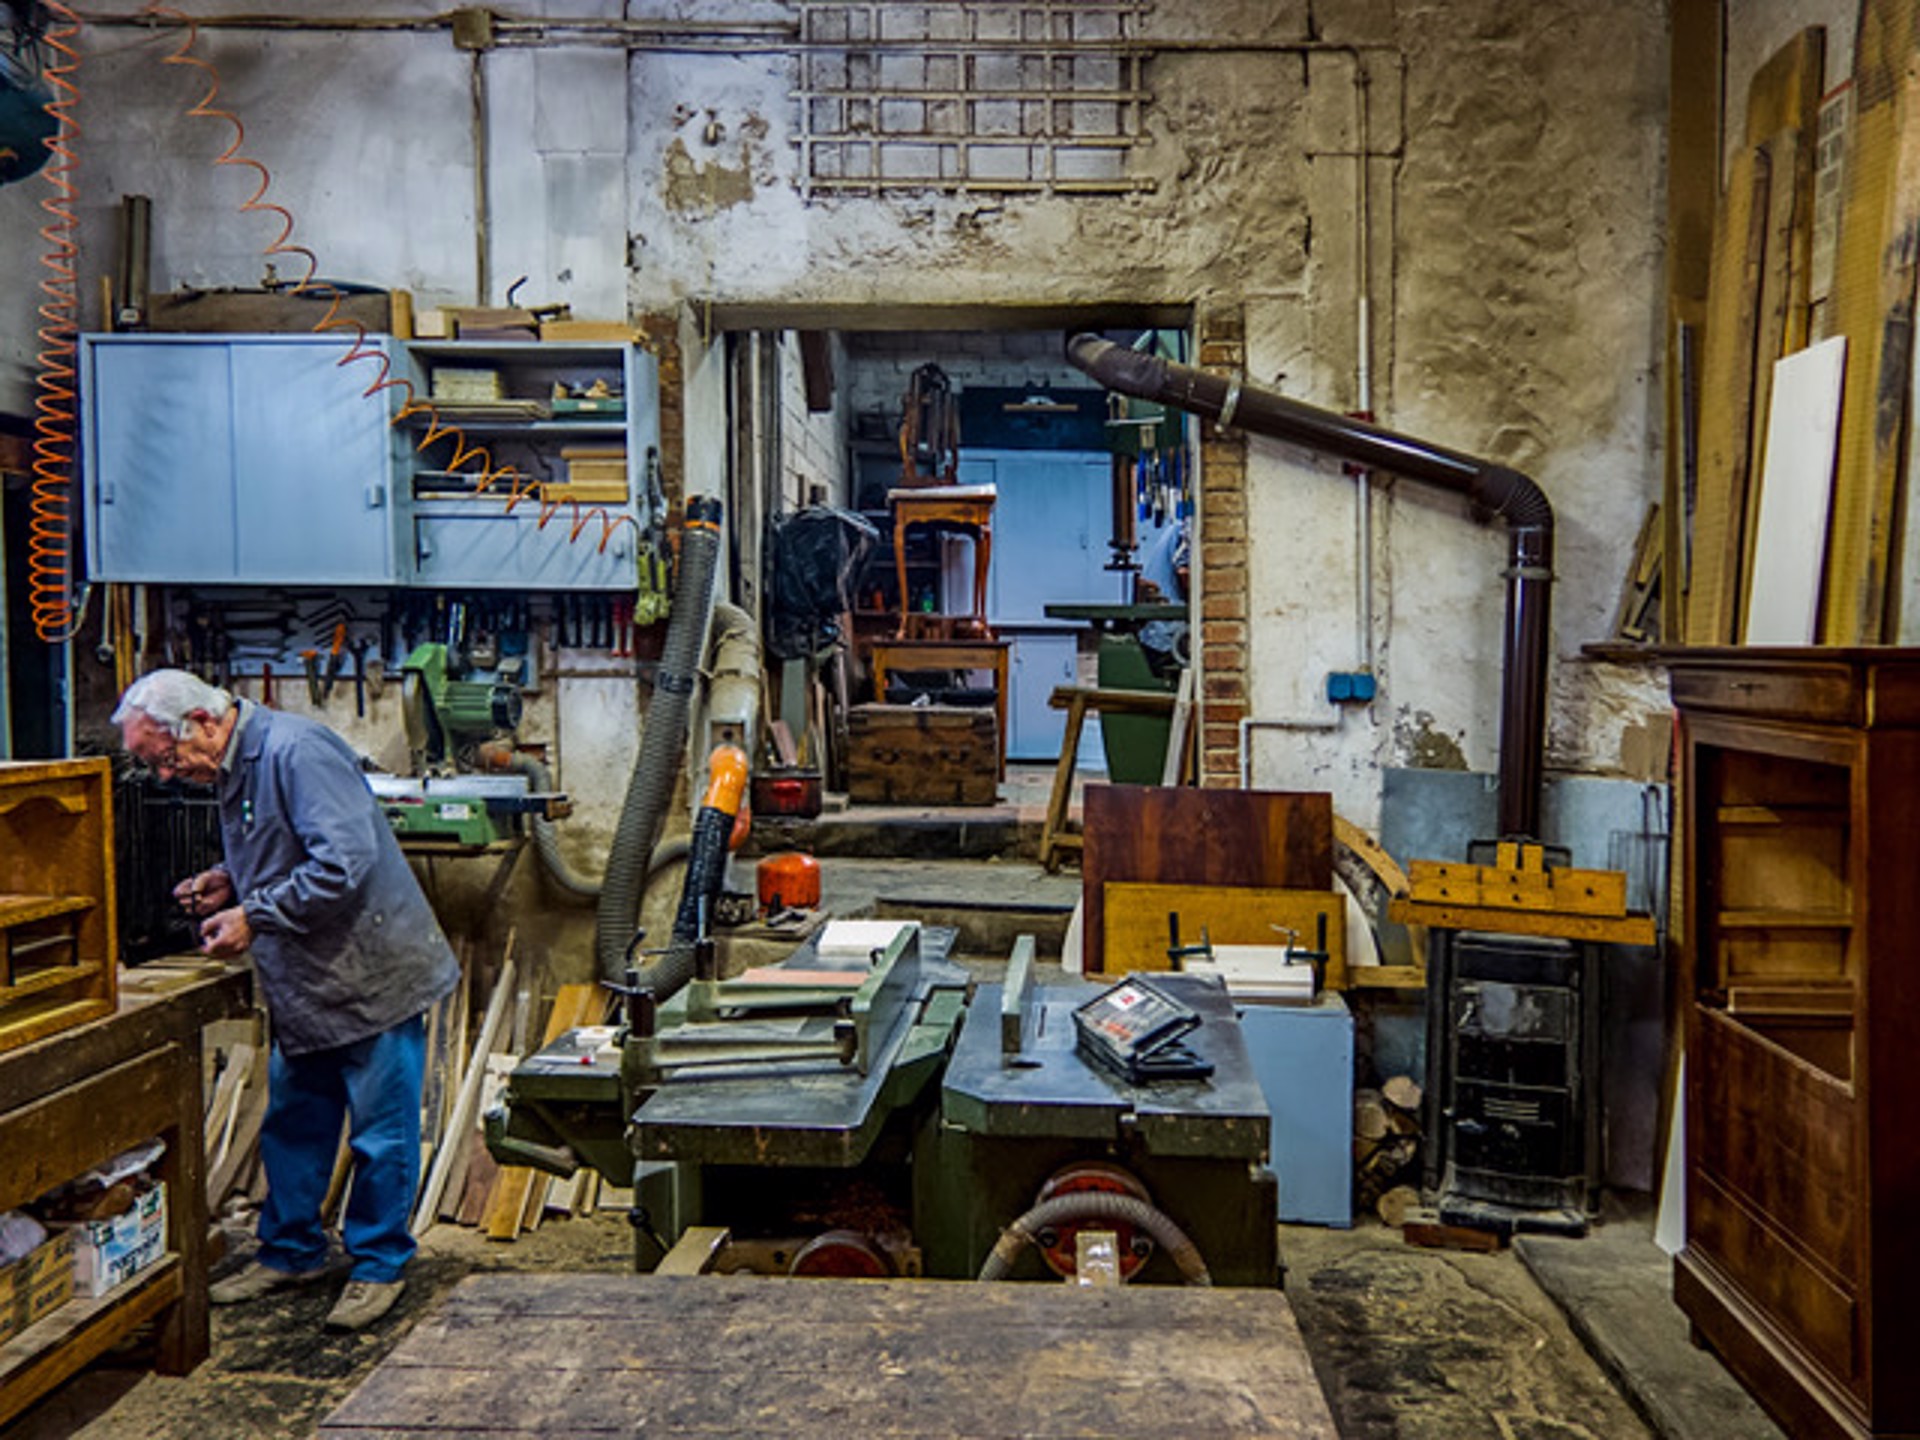 Furniture Repair Studio, Siena, Italy by Lawrence McFarland